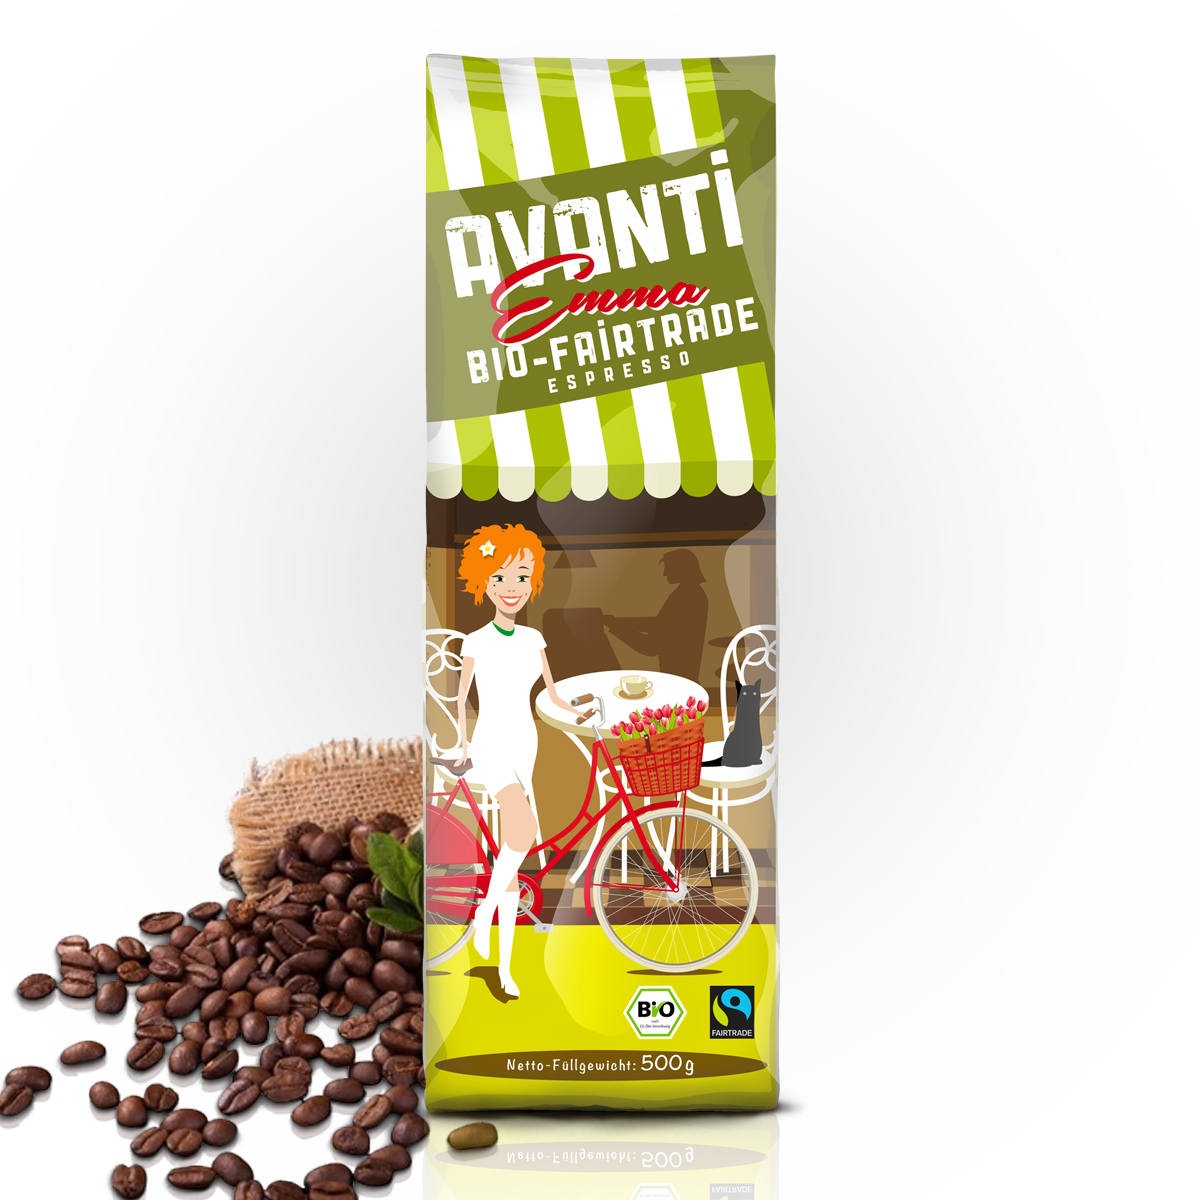 Caffè Avanti - EMMA Bio Fairtrade - 500g Beutel - Bohnen